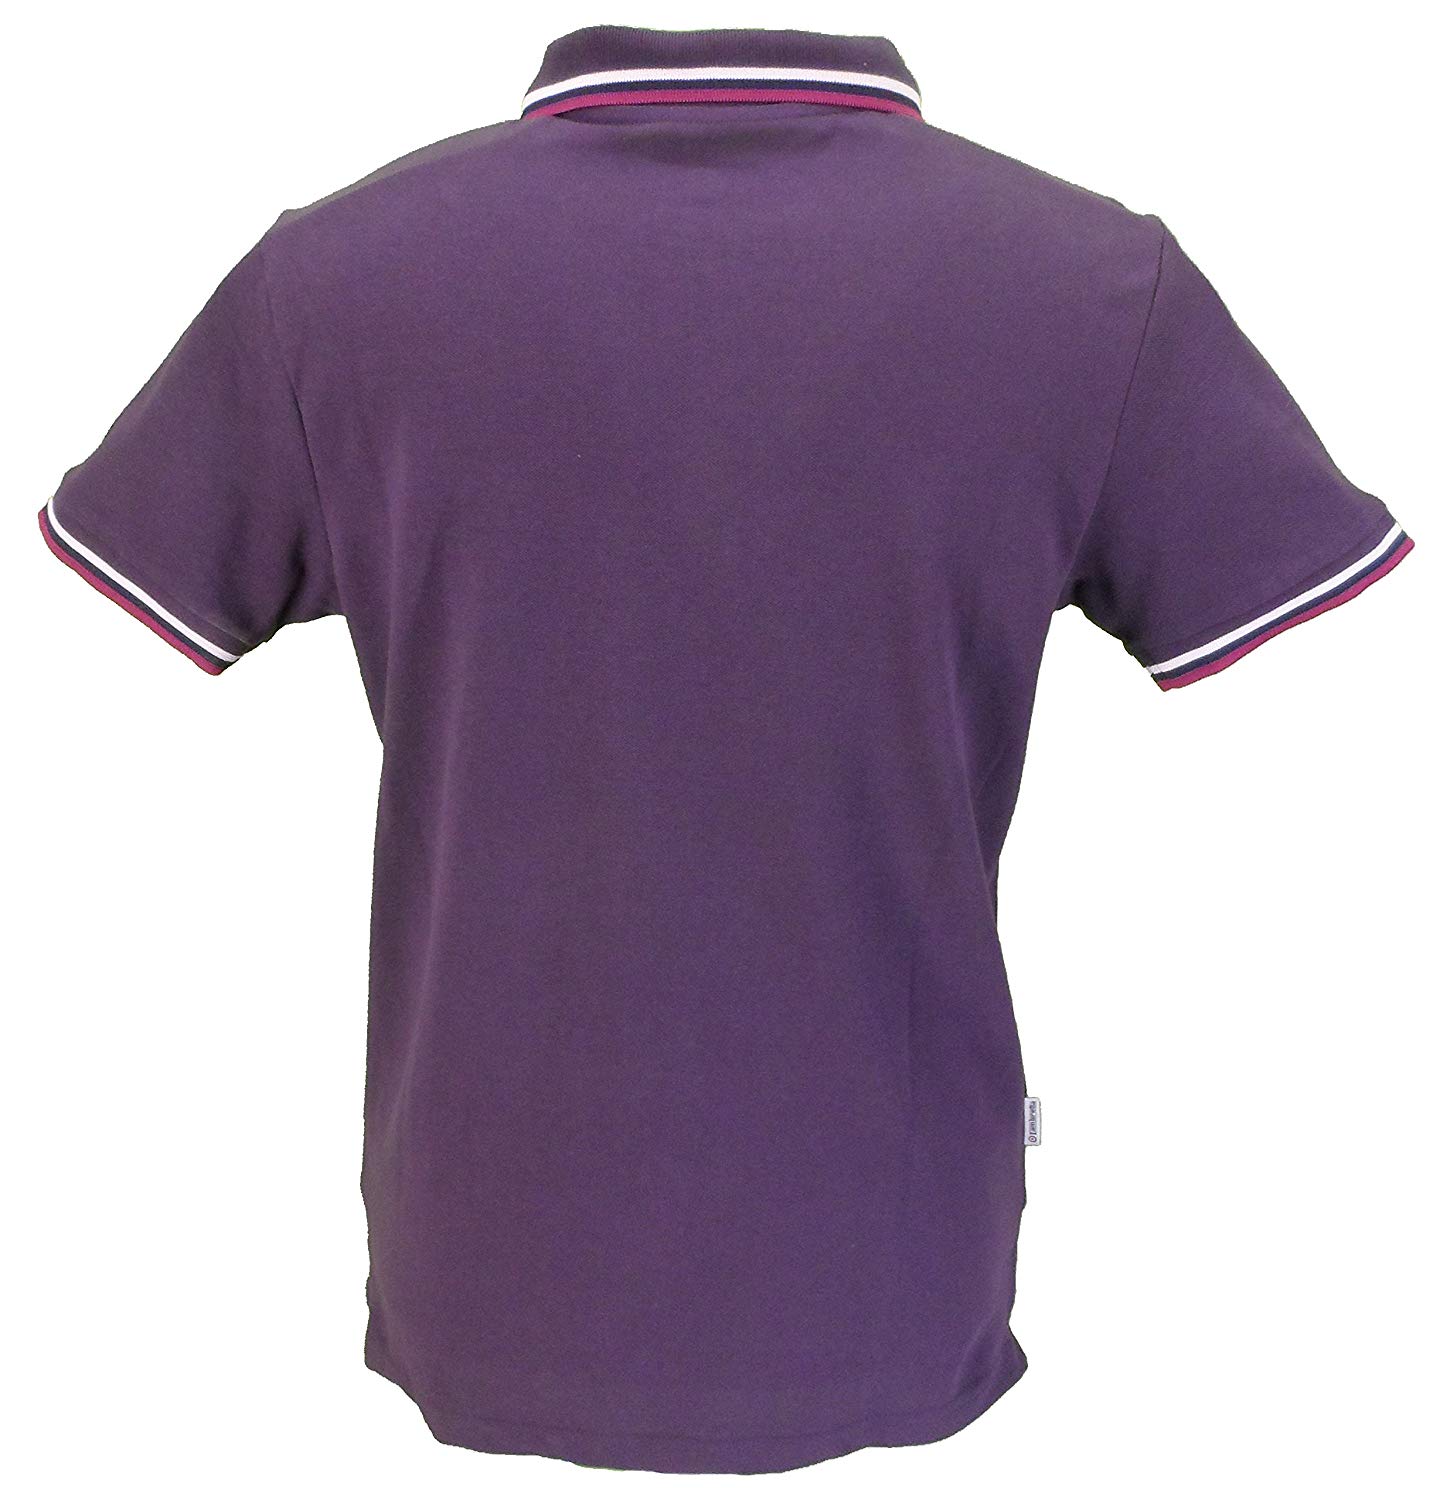 Lavender Polo Logo - Lambretta Purple Tipped Polo Shirts ...: Amazon.co.uk: Clothing